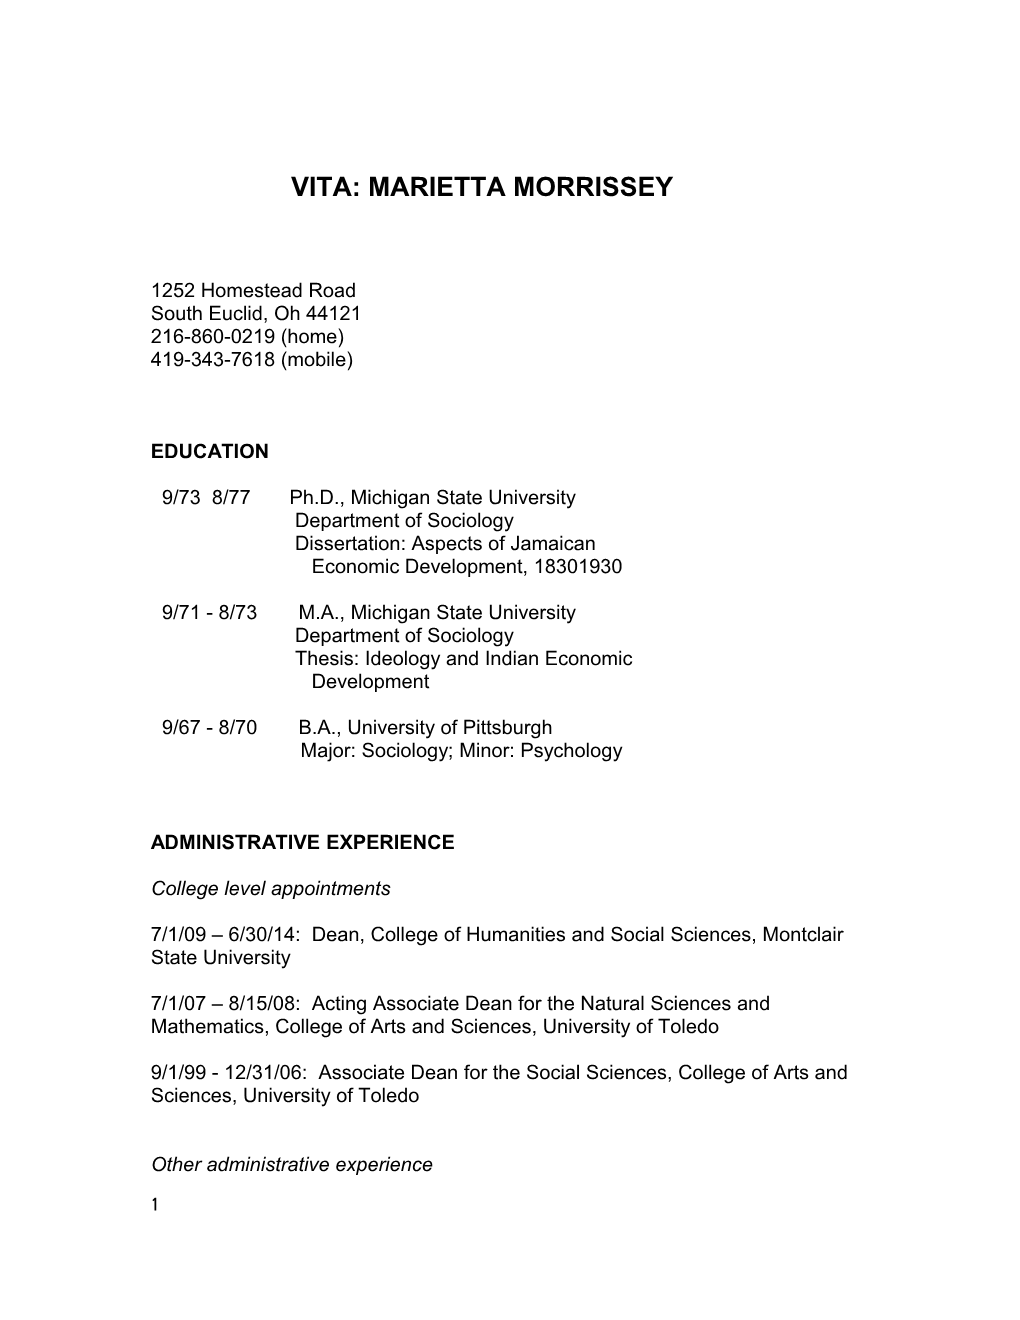 Vita: Marietta Morrissey